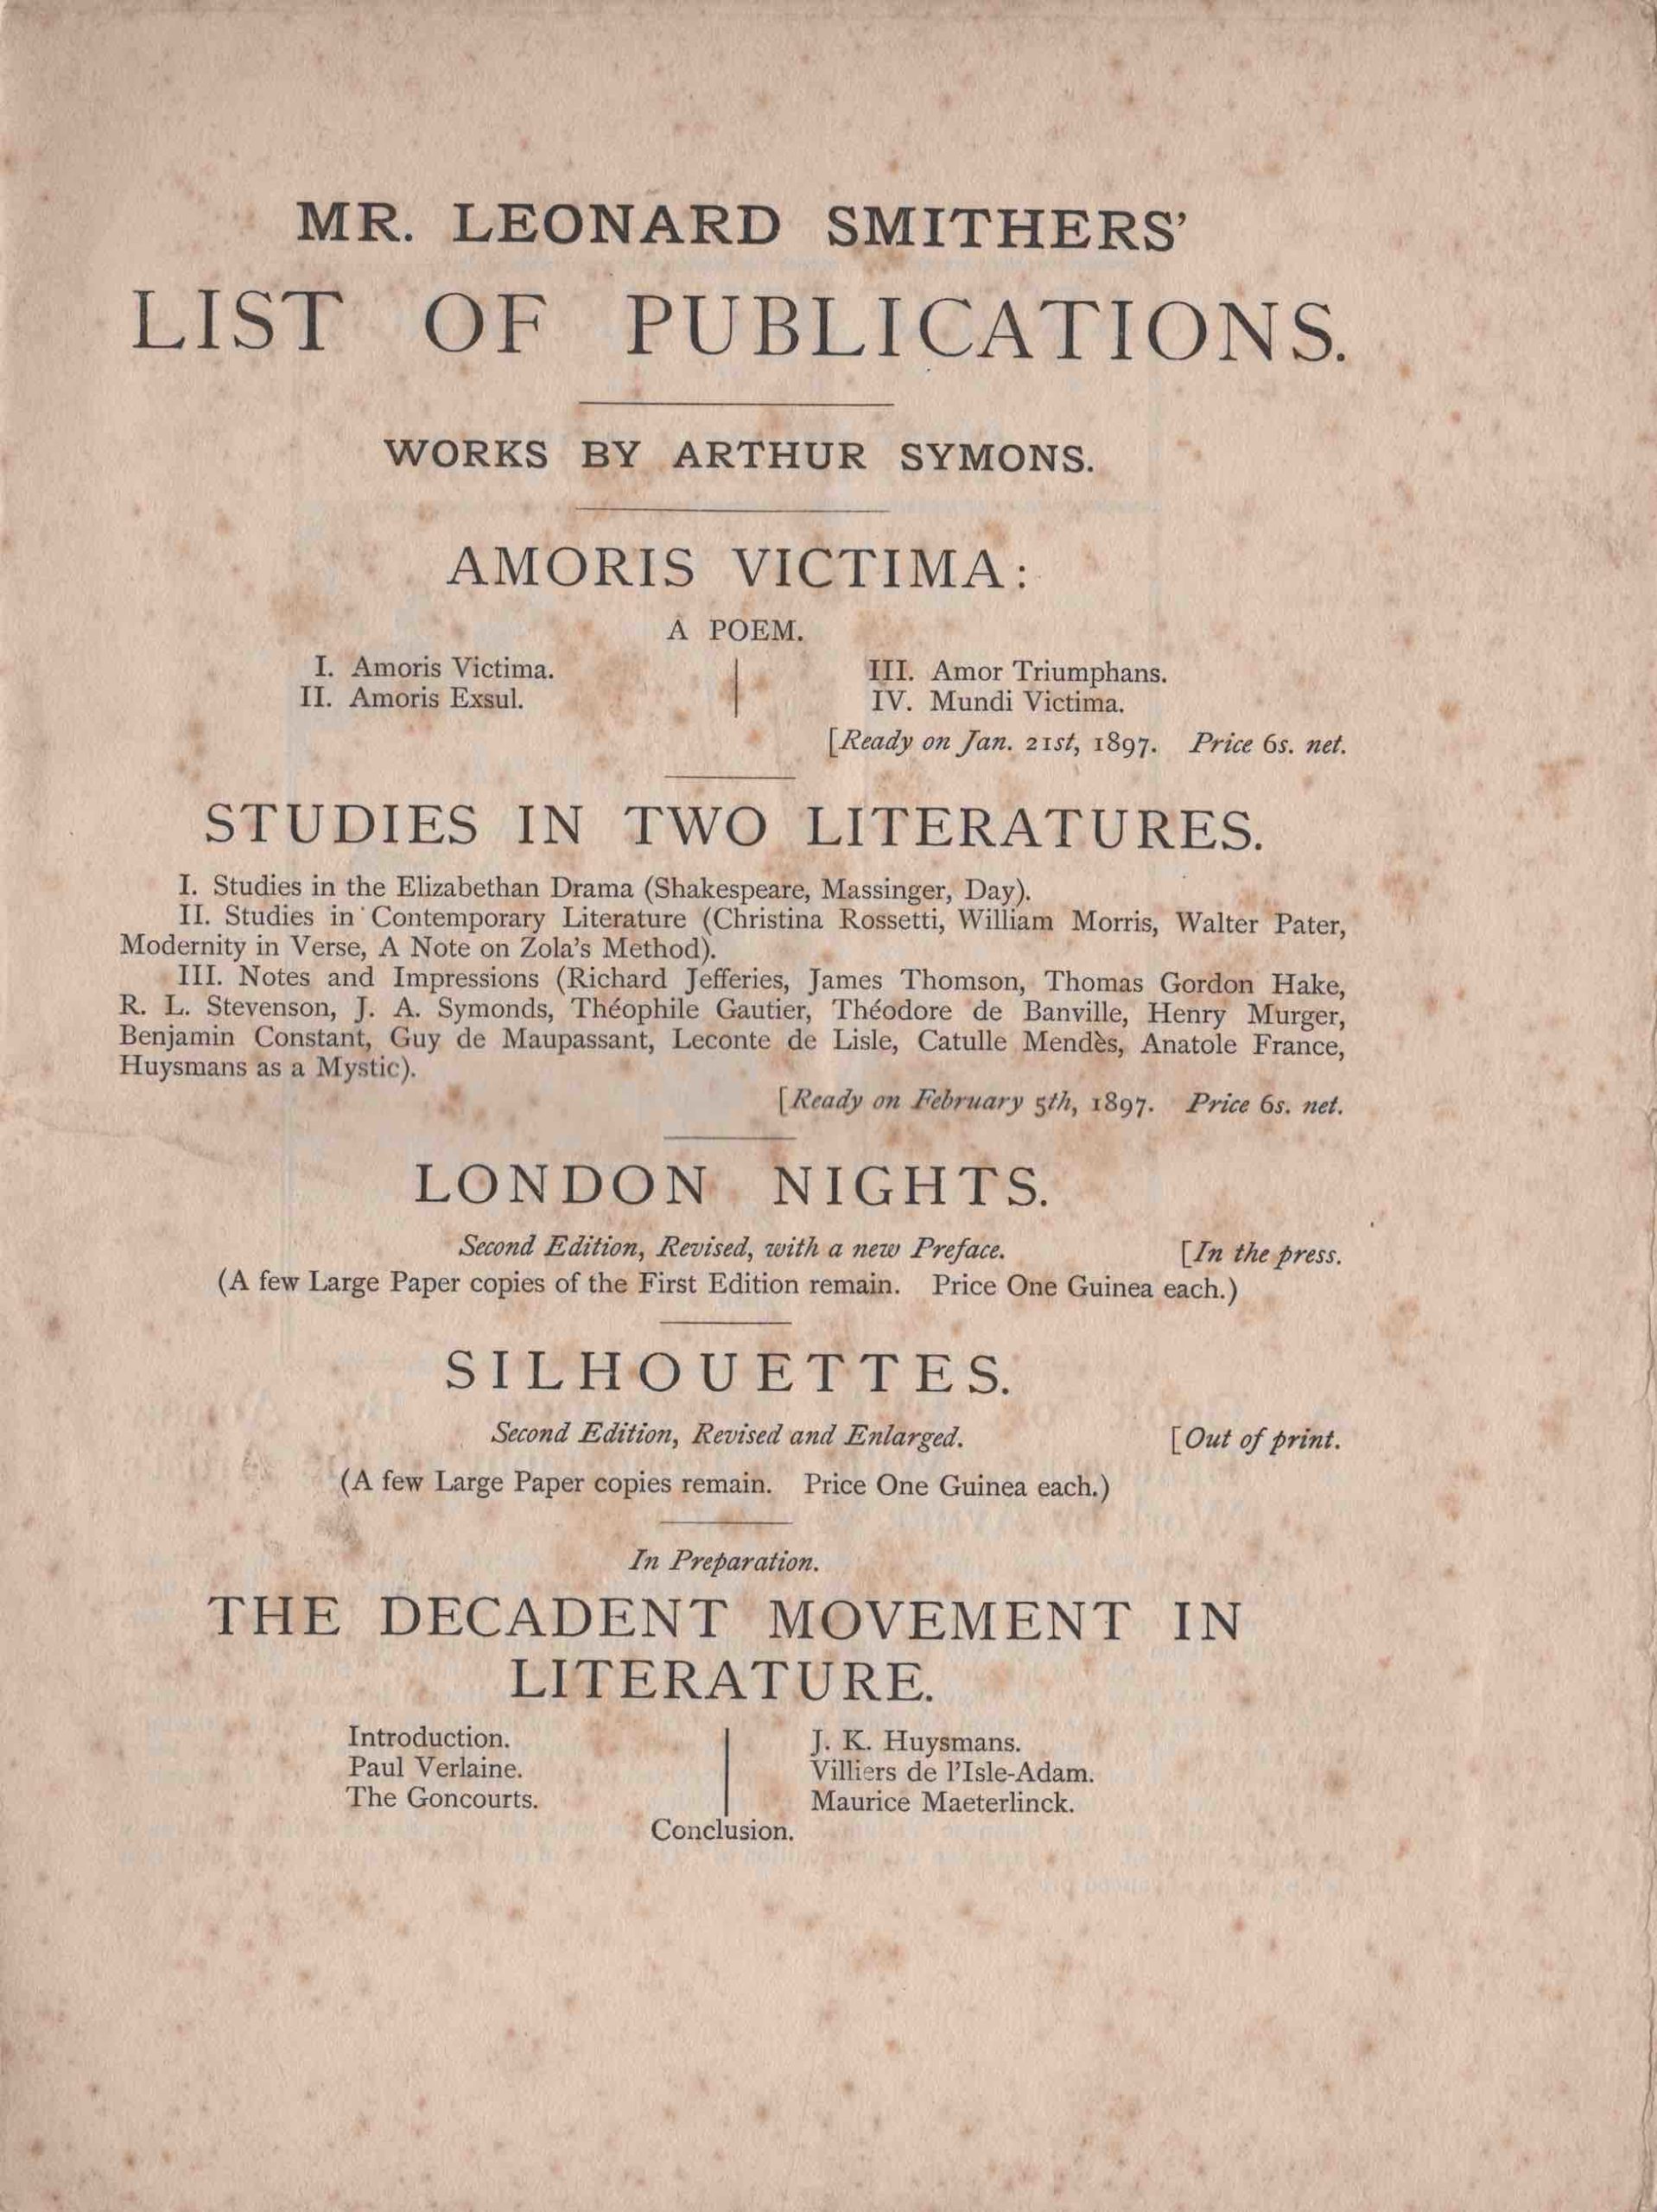 Mr Leonard Smithers' List of Publications